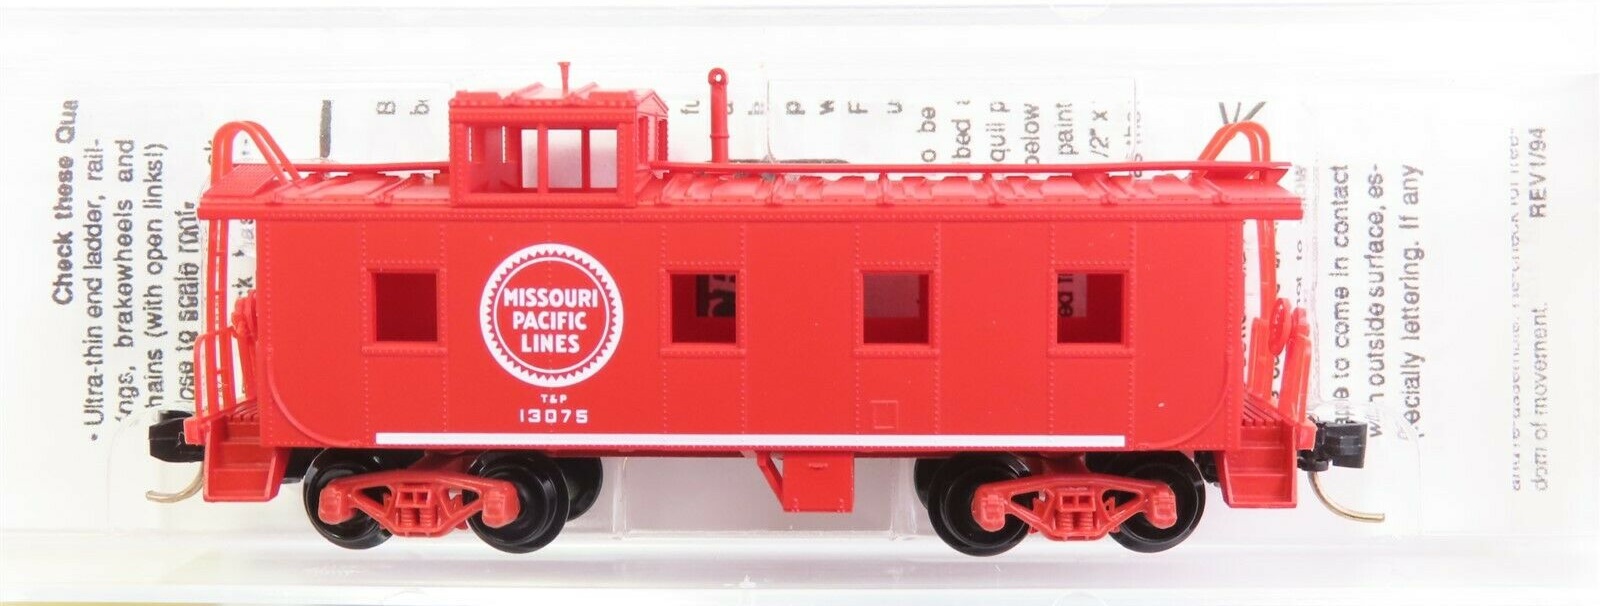 N Scale - Micro-Trains - 100020 - Caboose, Cupola, Steel - Missouri Pacific - 13075